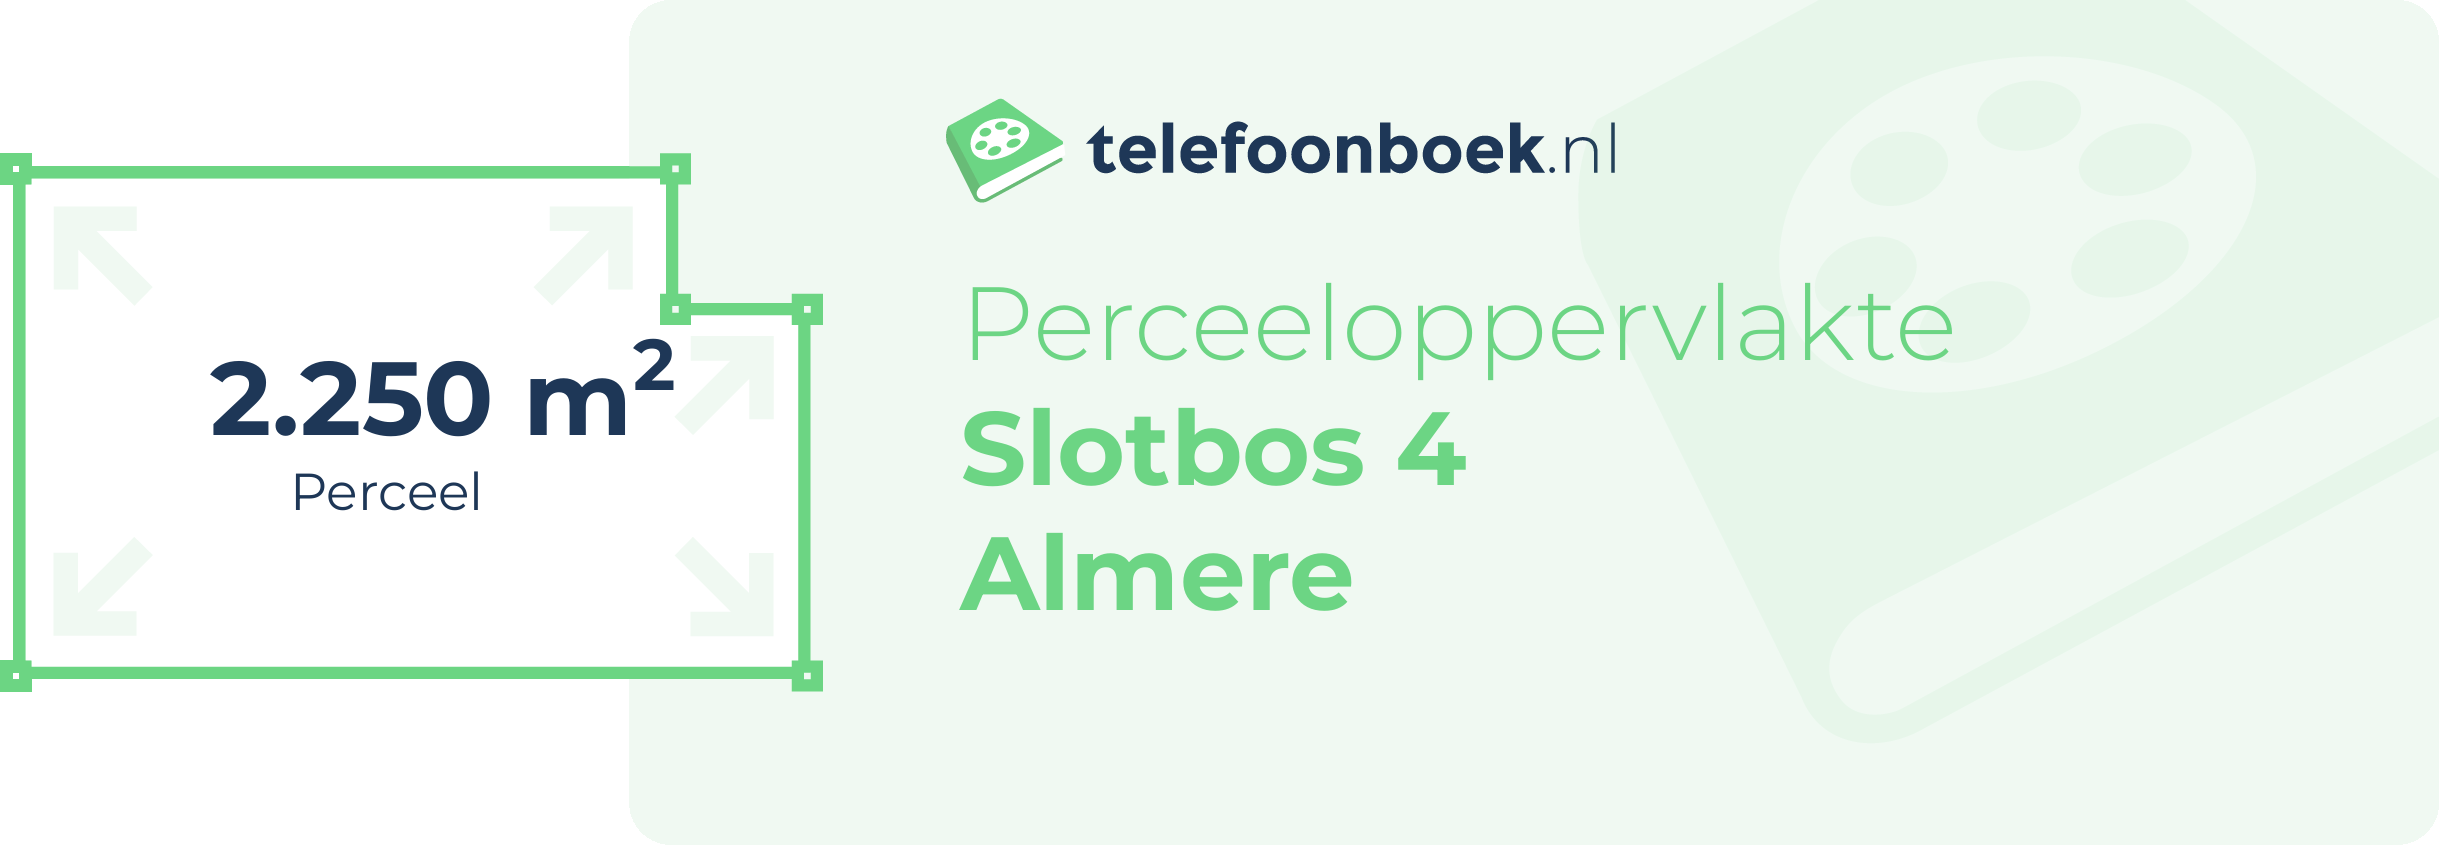 Perceeloppervlakte Slotbos 4 Almere